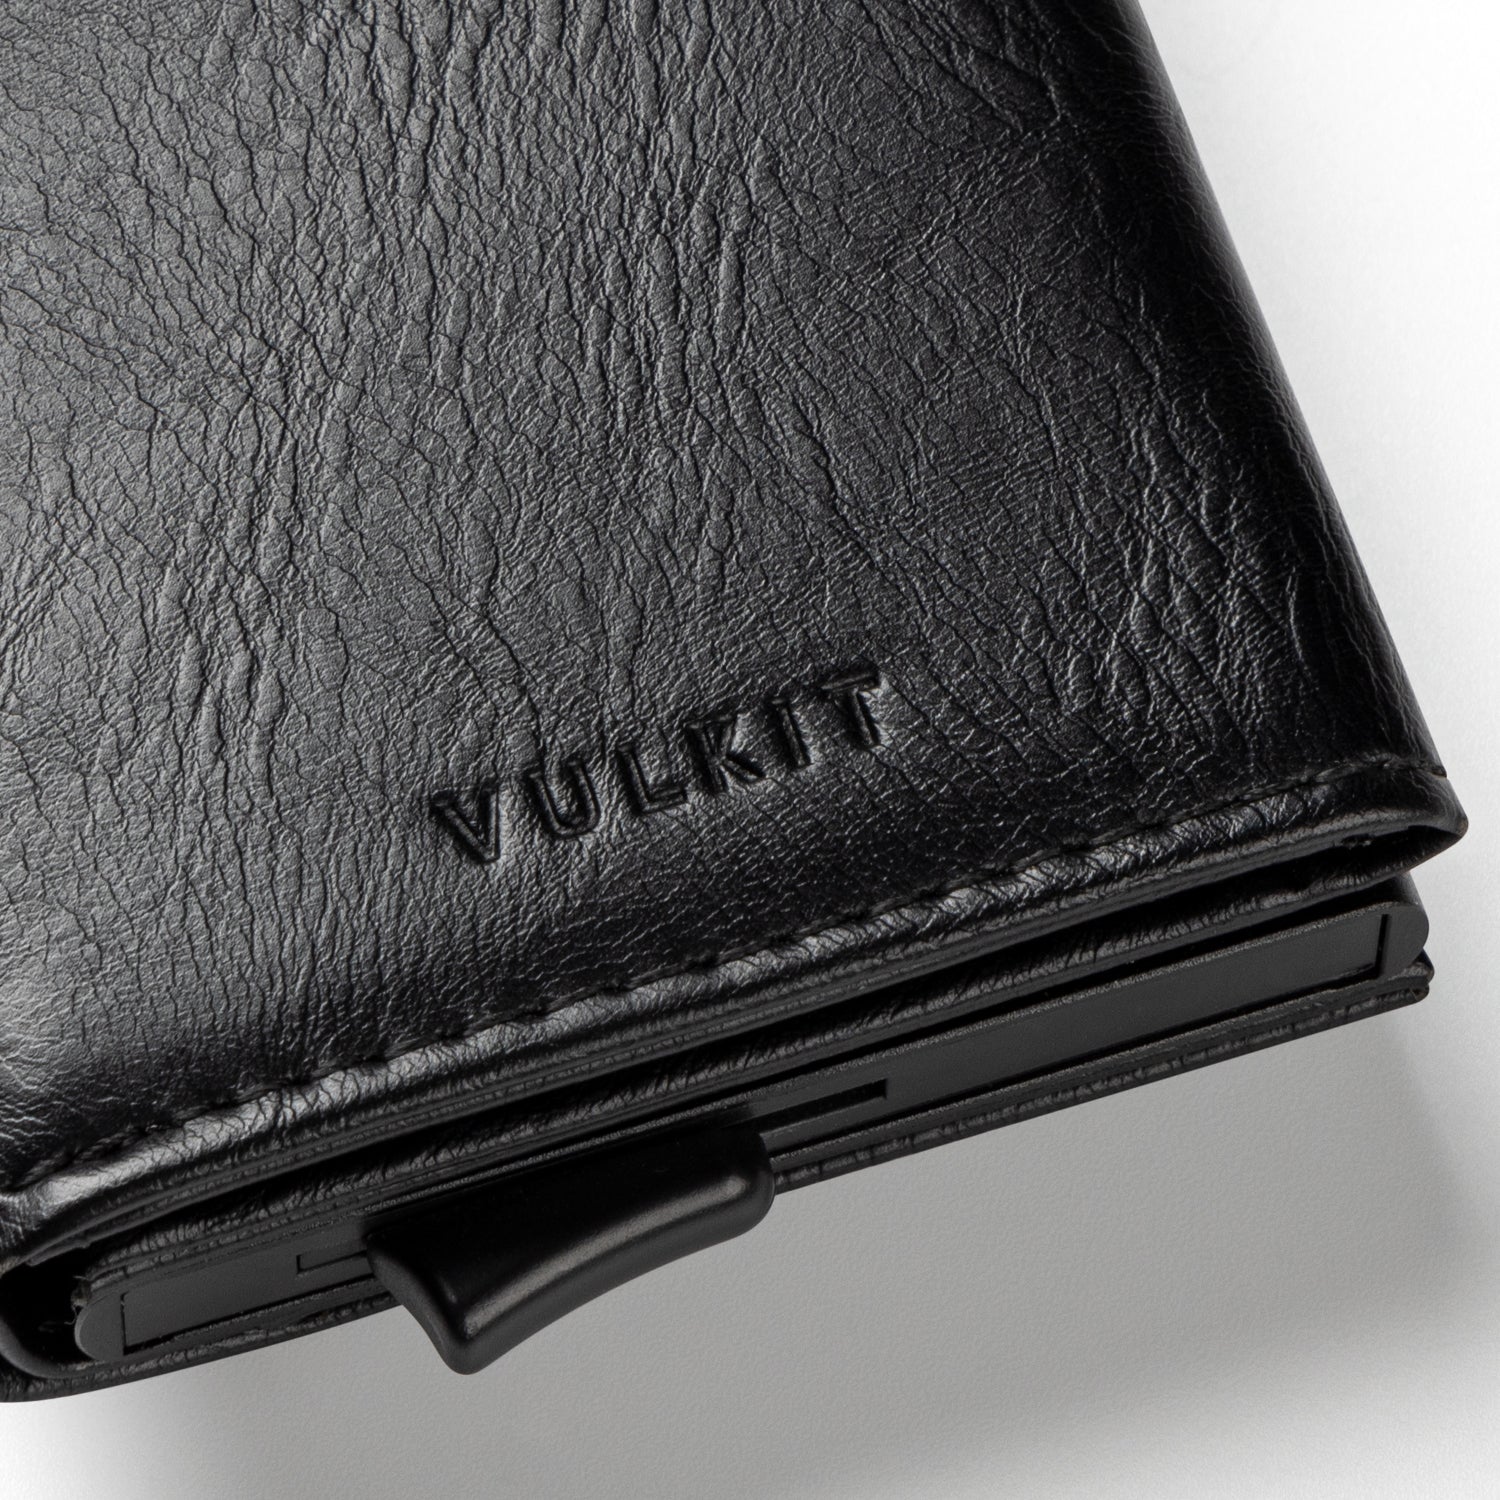 VULKIT Money Clip Wallet Pop Up Card Holder RFID Protection Mens Leather  Wallet 2-IN-1 Business Card Holder For 7 Cards & 15 Bills